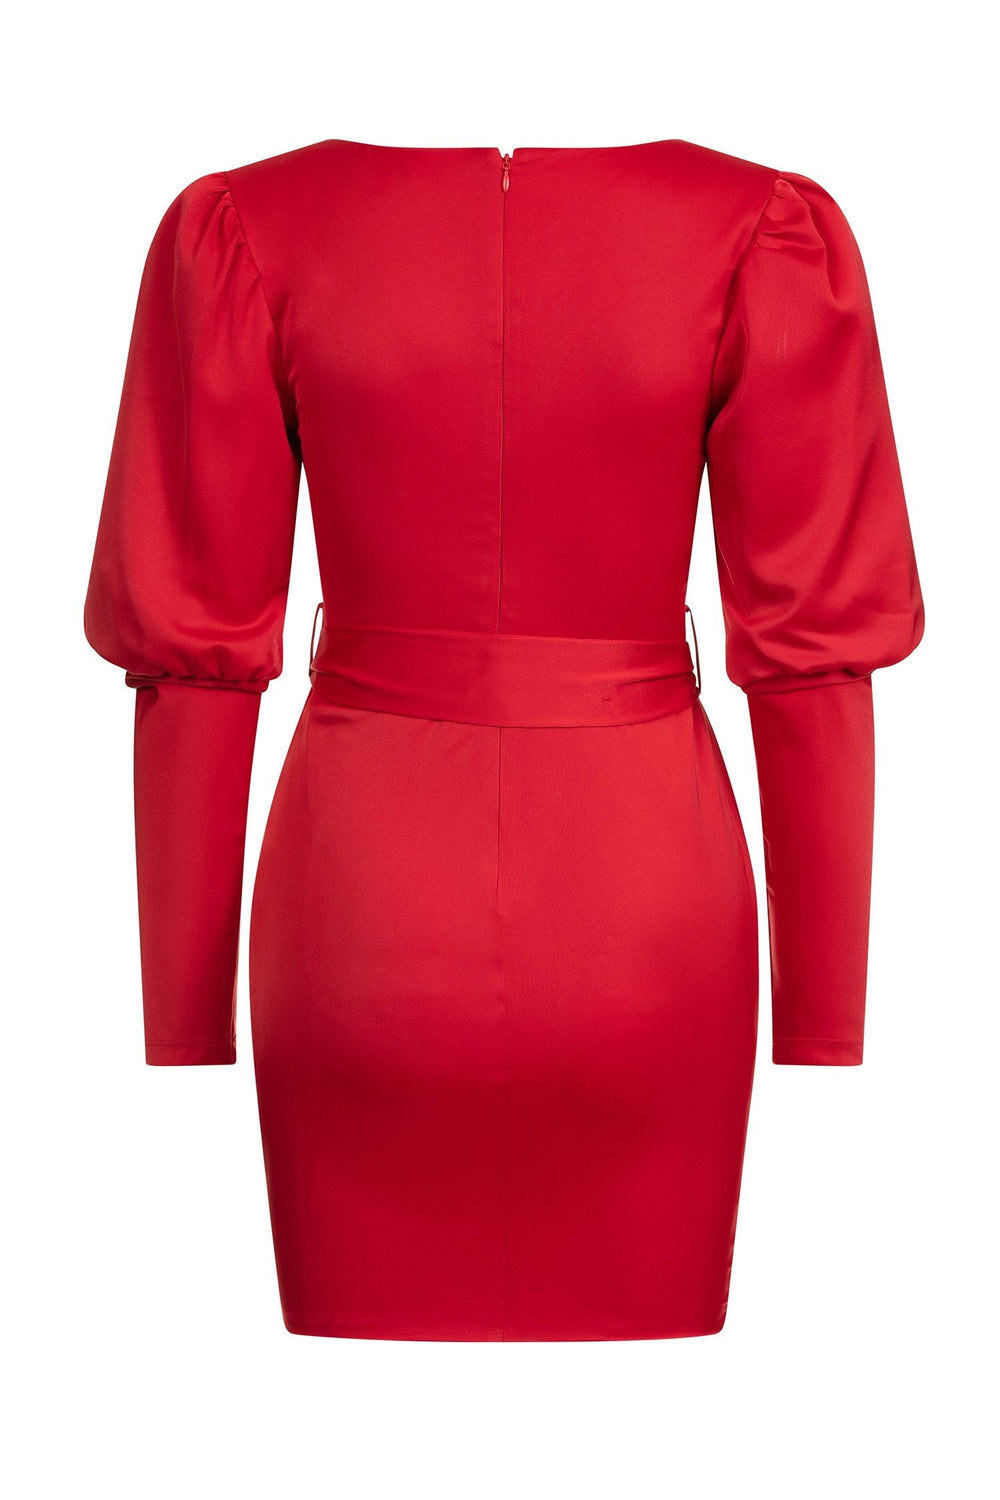 Marla Dress - Red Matte Satin Mini Dress with Long Sleeves & V-Neck